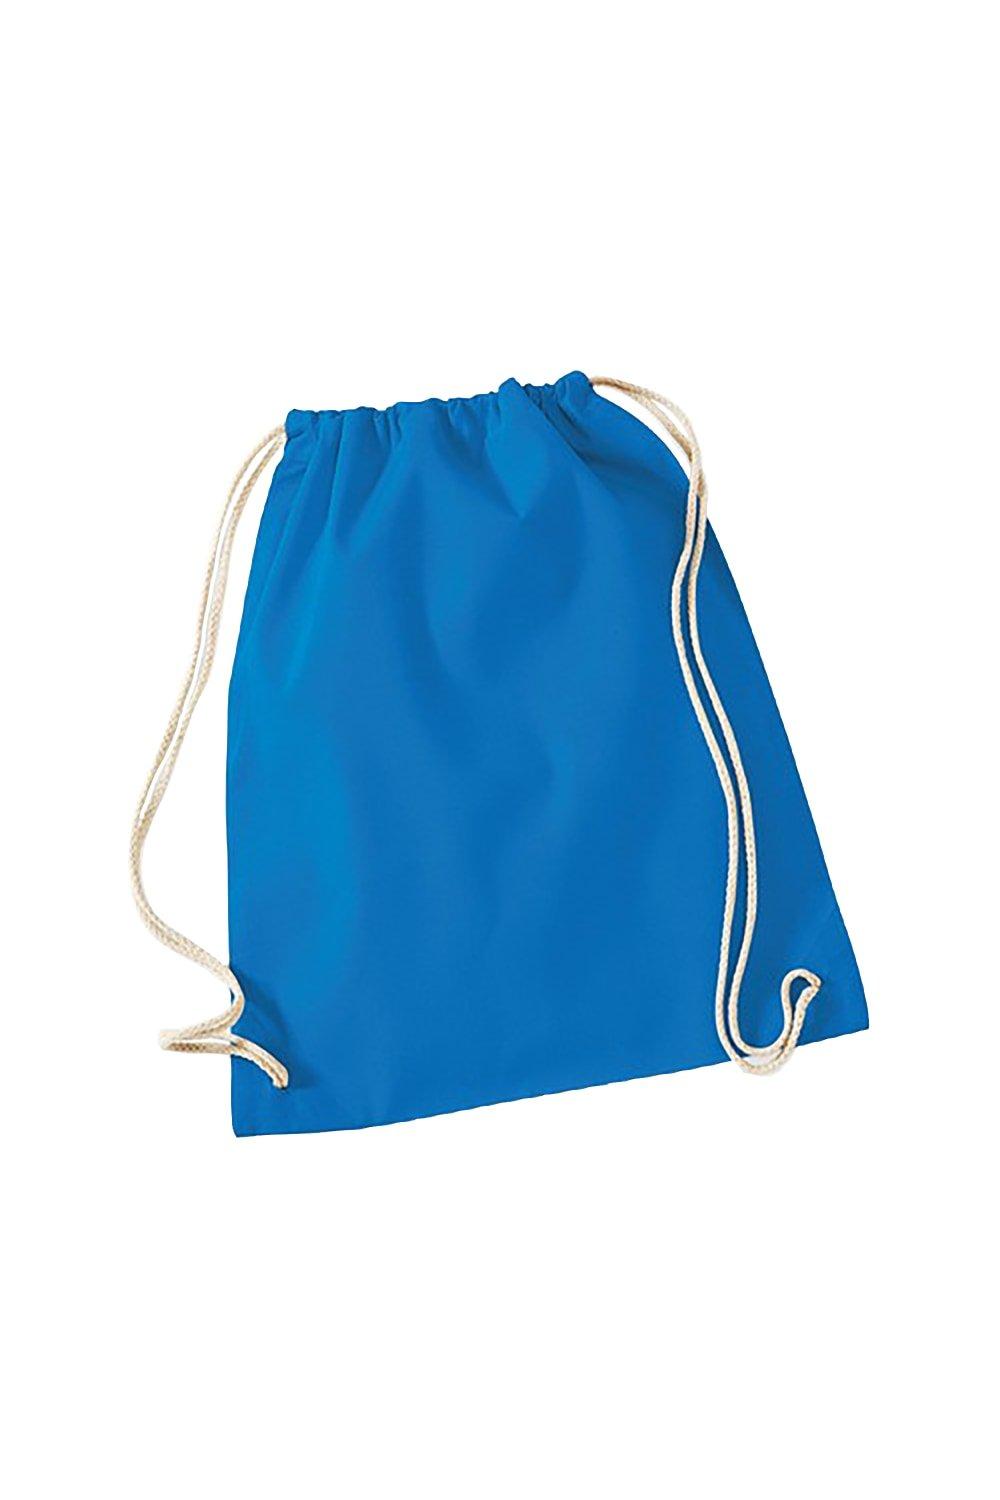 цена Хлопковая сумка Gymsac - 12 литров Westford Mill, синий